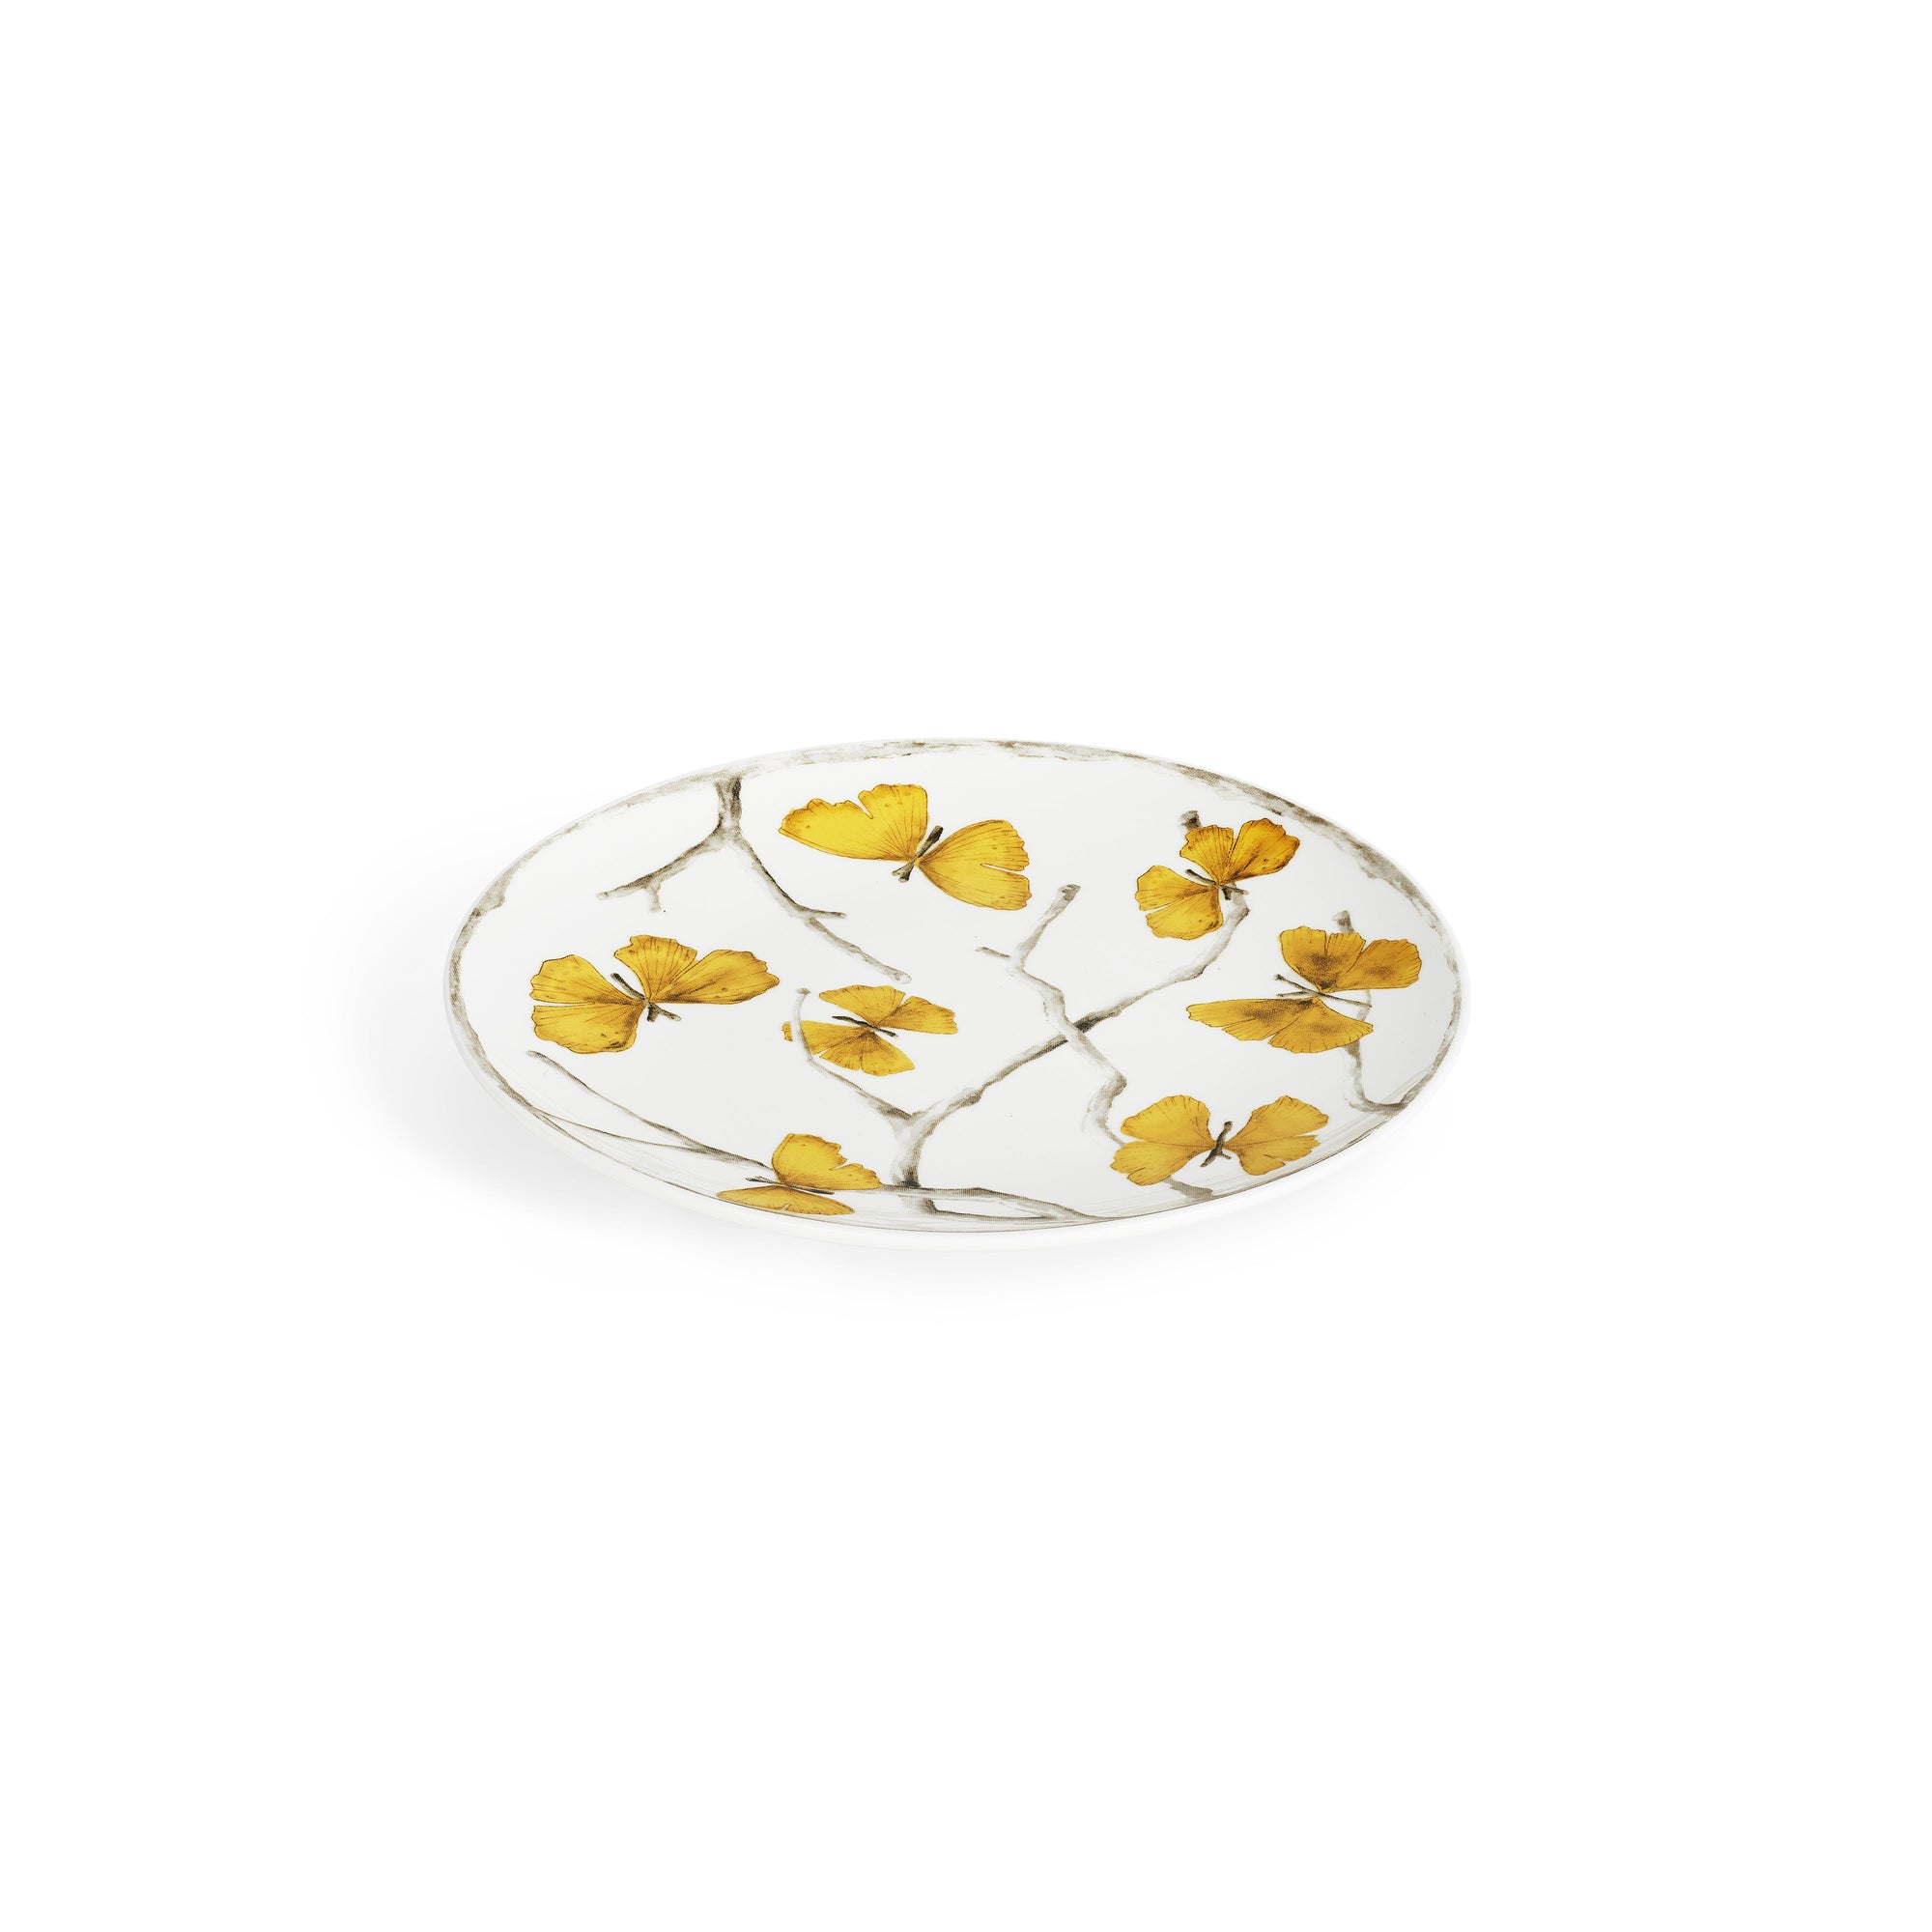 Michael Aram Butterfly Ginkgo Gold Tidbit Plate Set